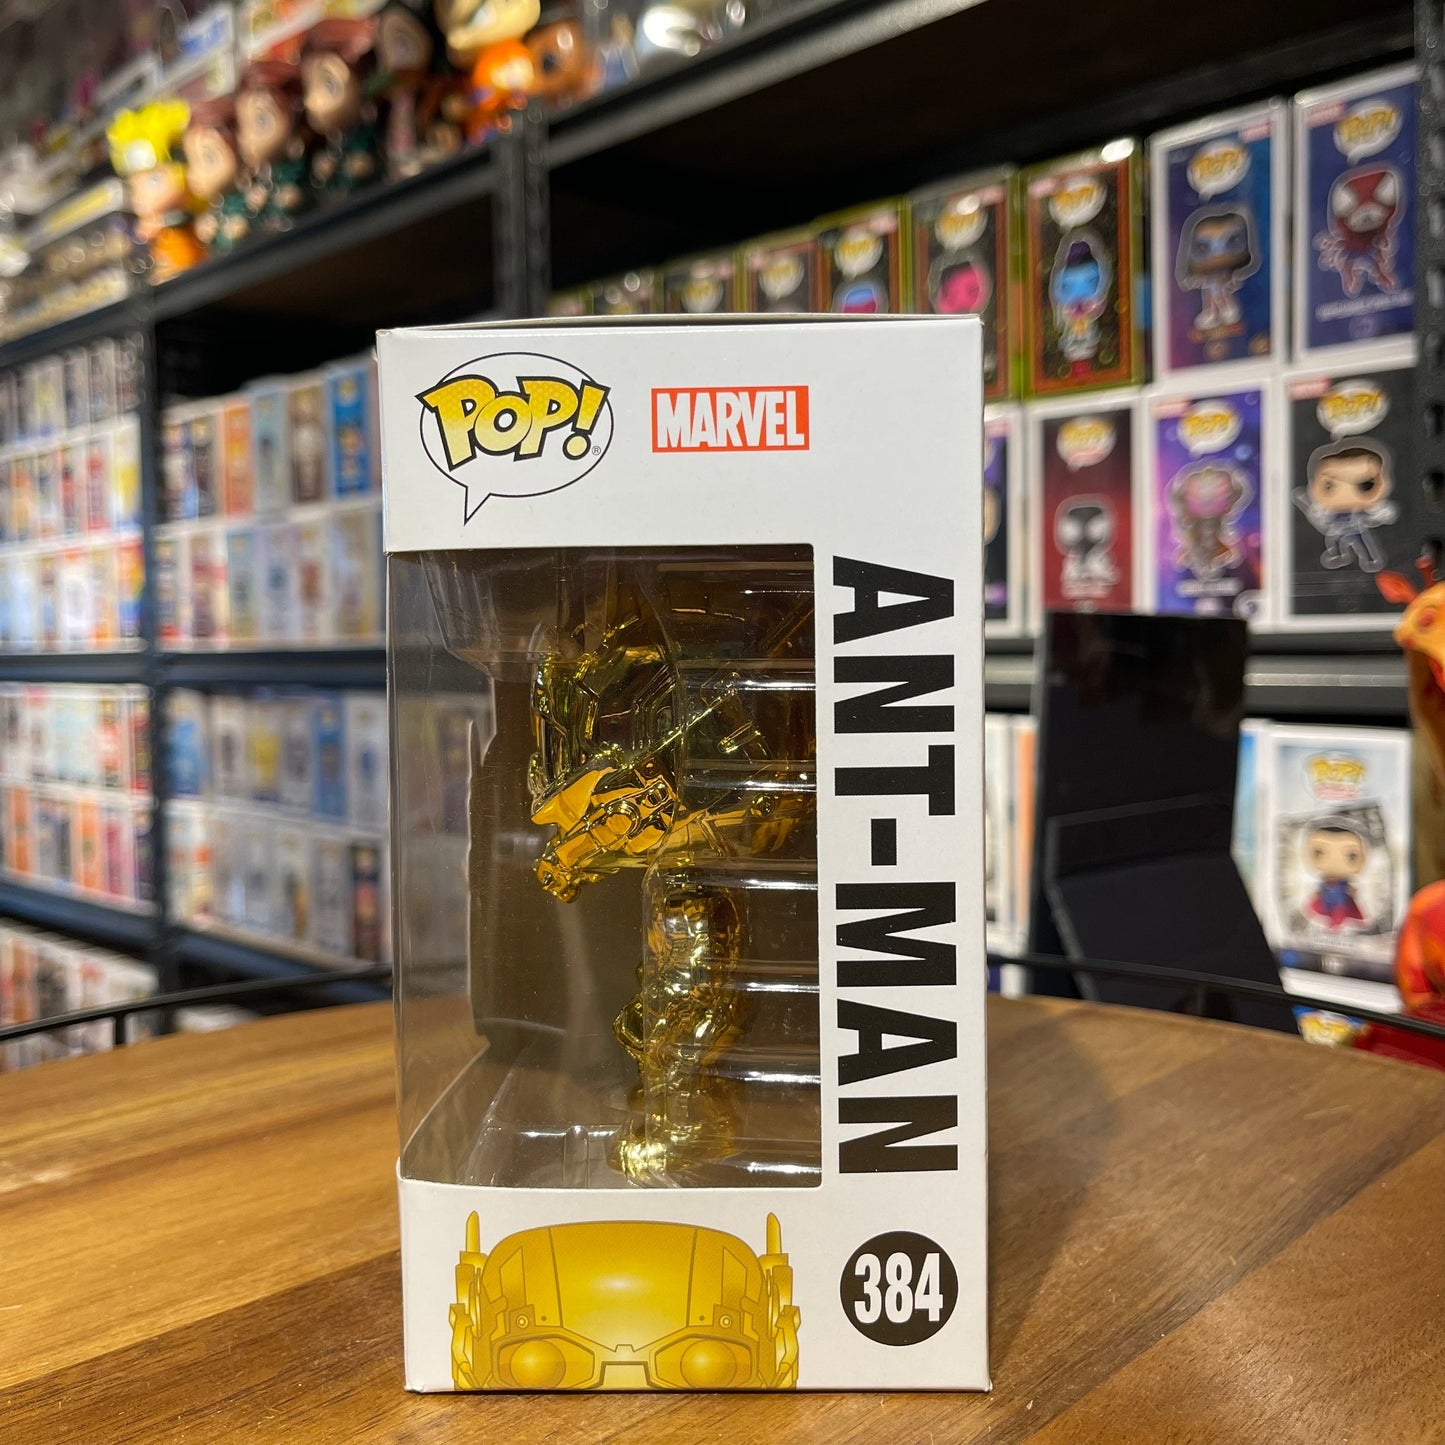 Pop! Marvel Studios - Ant Man (GoldChrome)